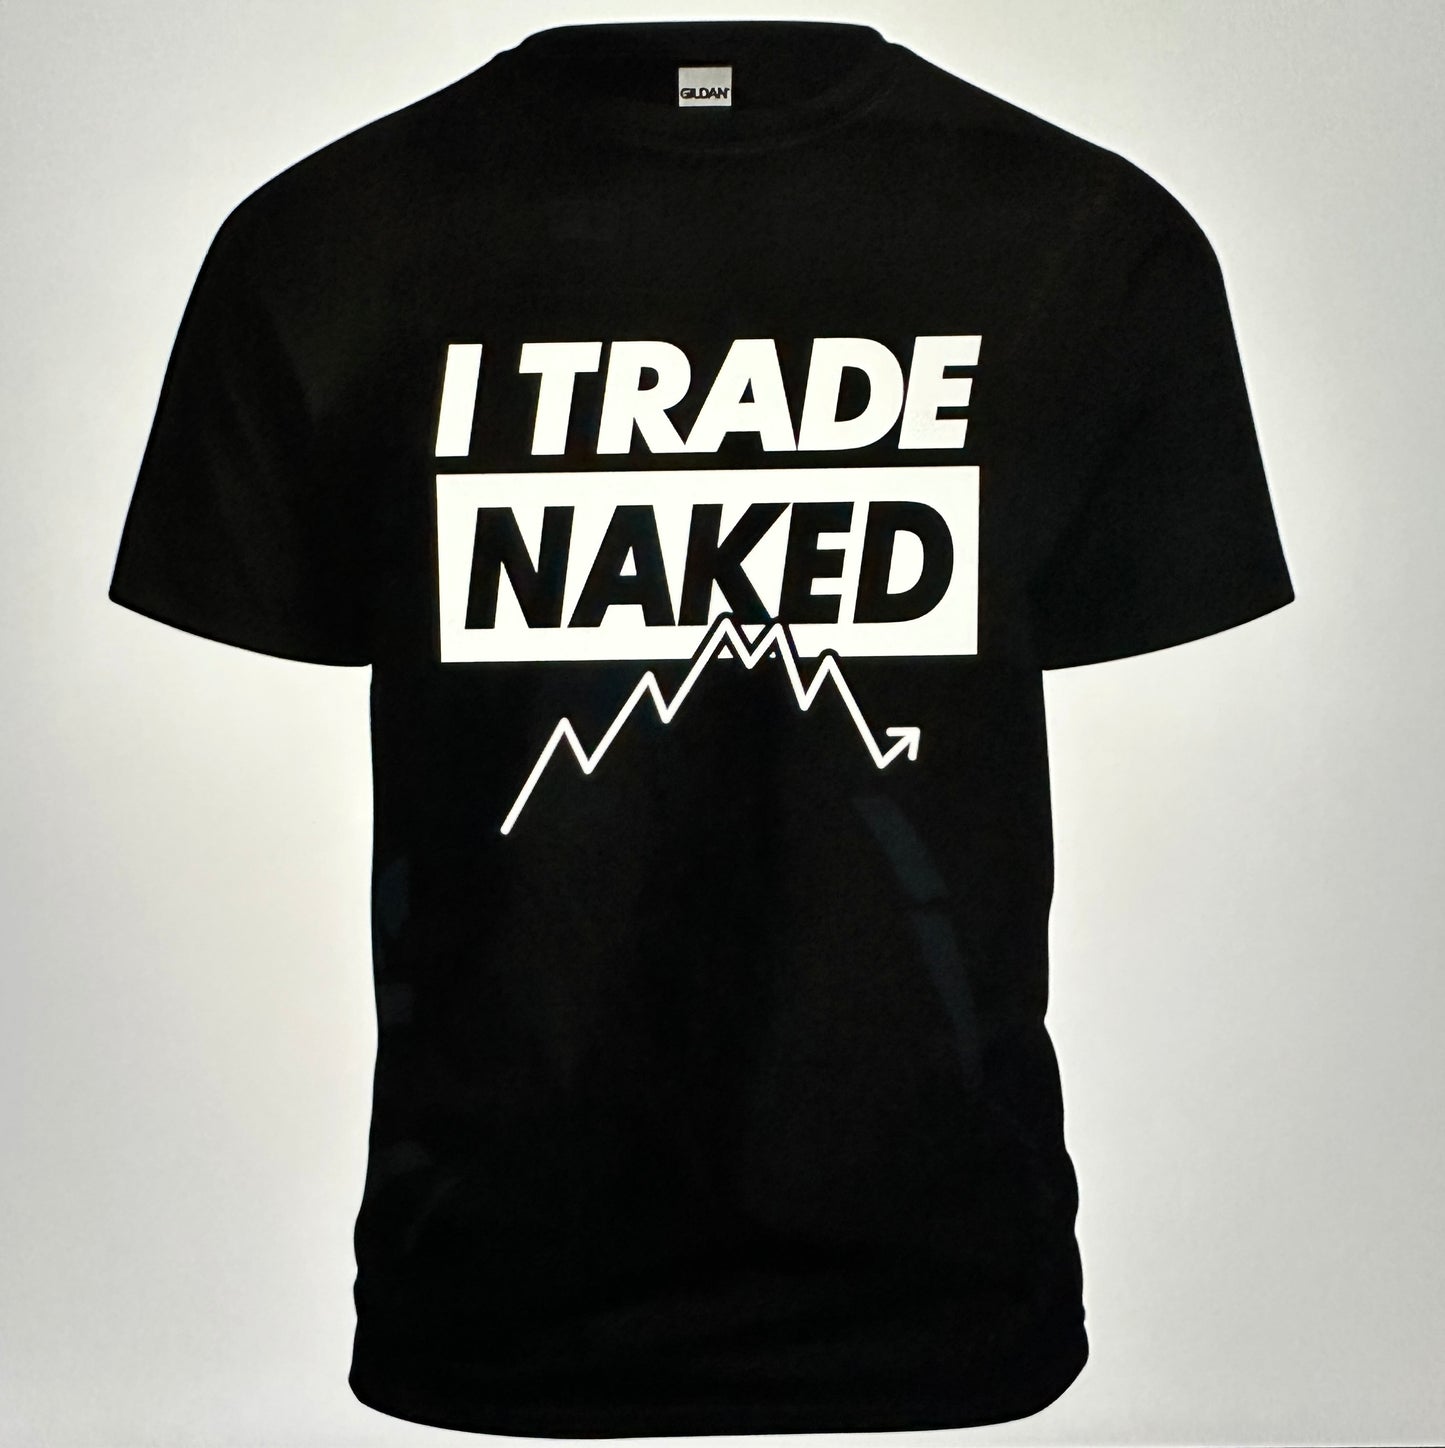 I Trade Naked Shirt w/ Take Profit Wristband